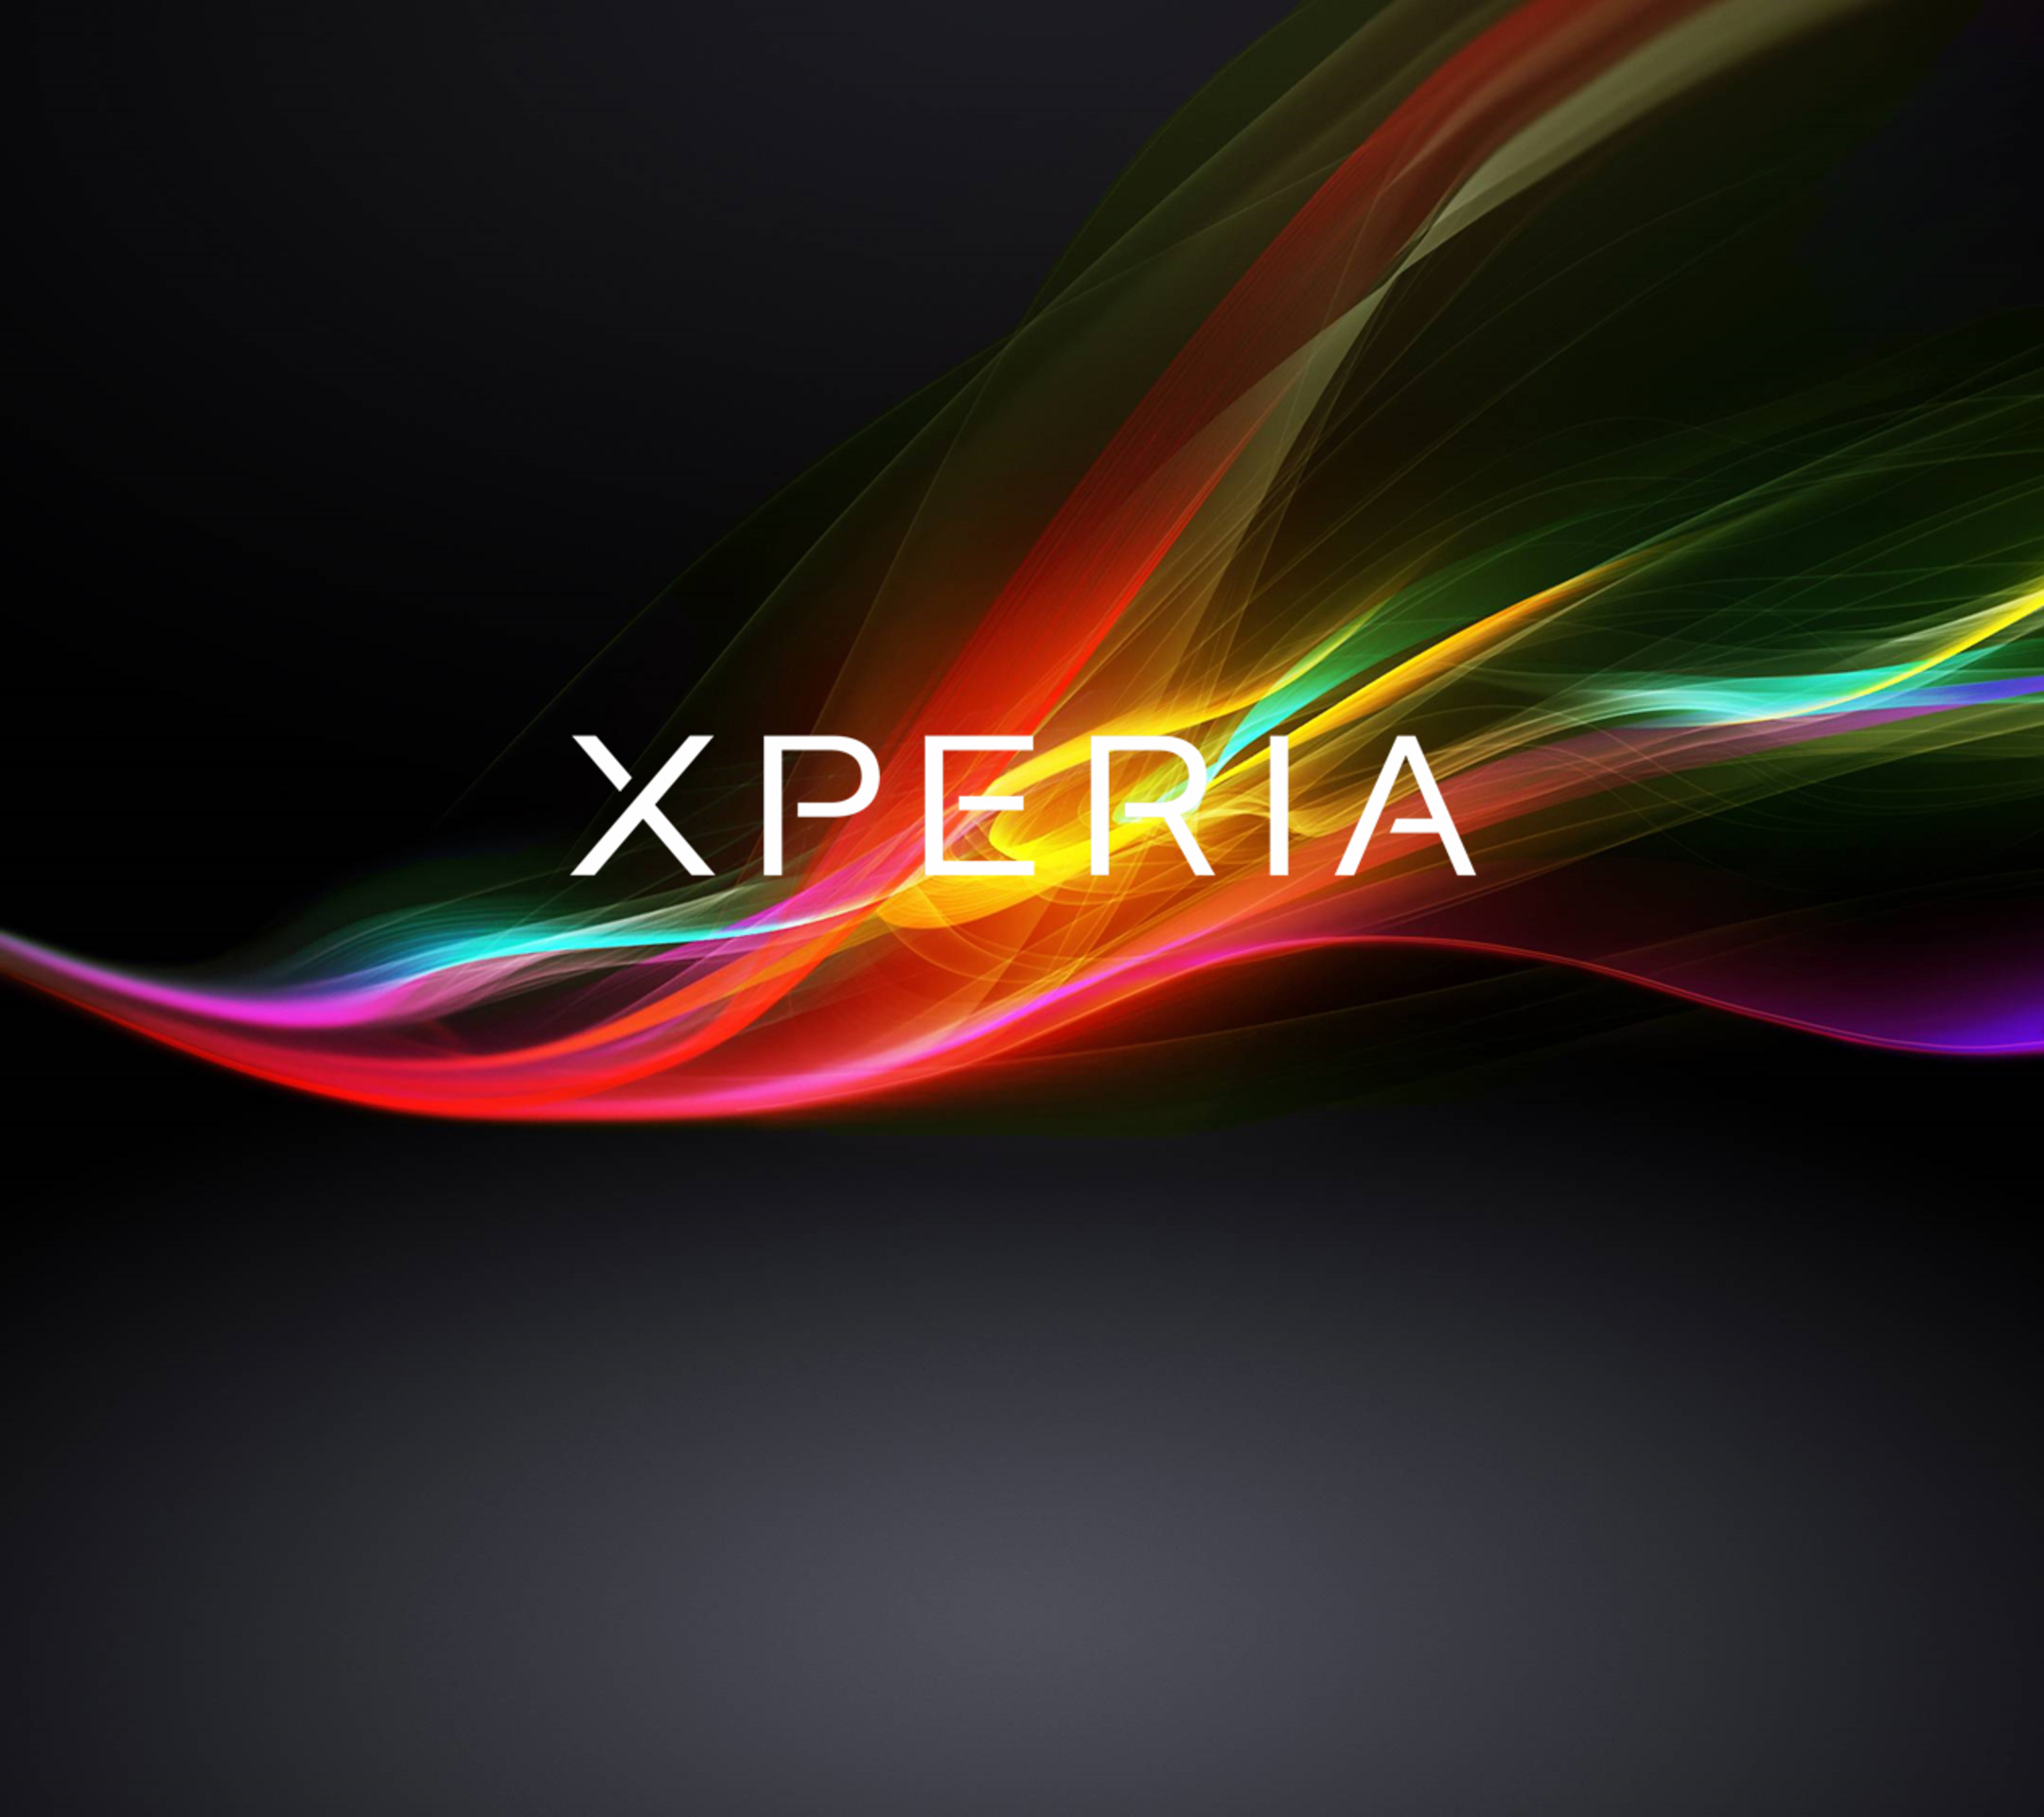 Обои xperia. Обои сони. Логотип Sony Xperia. Фоновые рисунки Sony Xperia. Xperia.